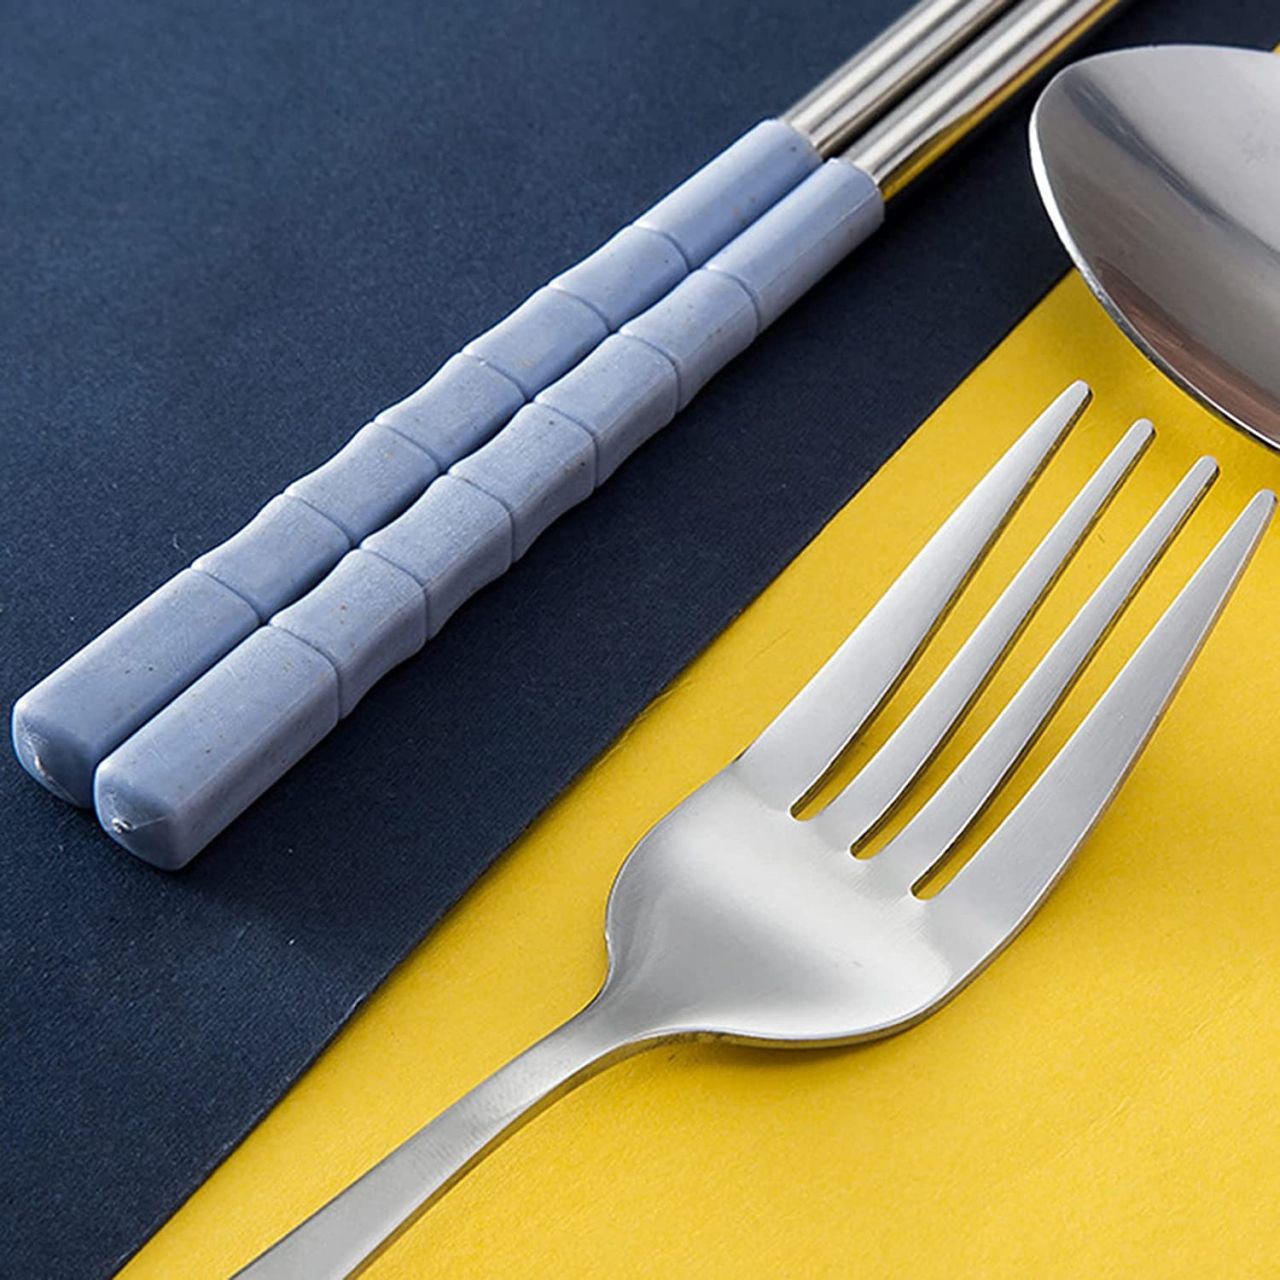 Wolpin Spoon Set Premium Stainless Steel Cutlery Set